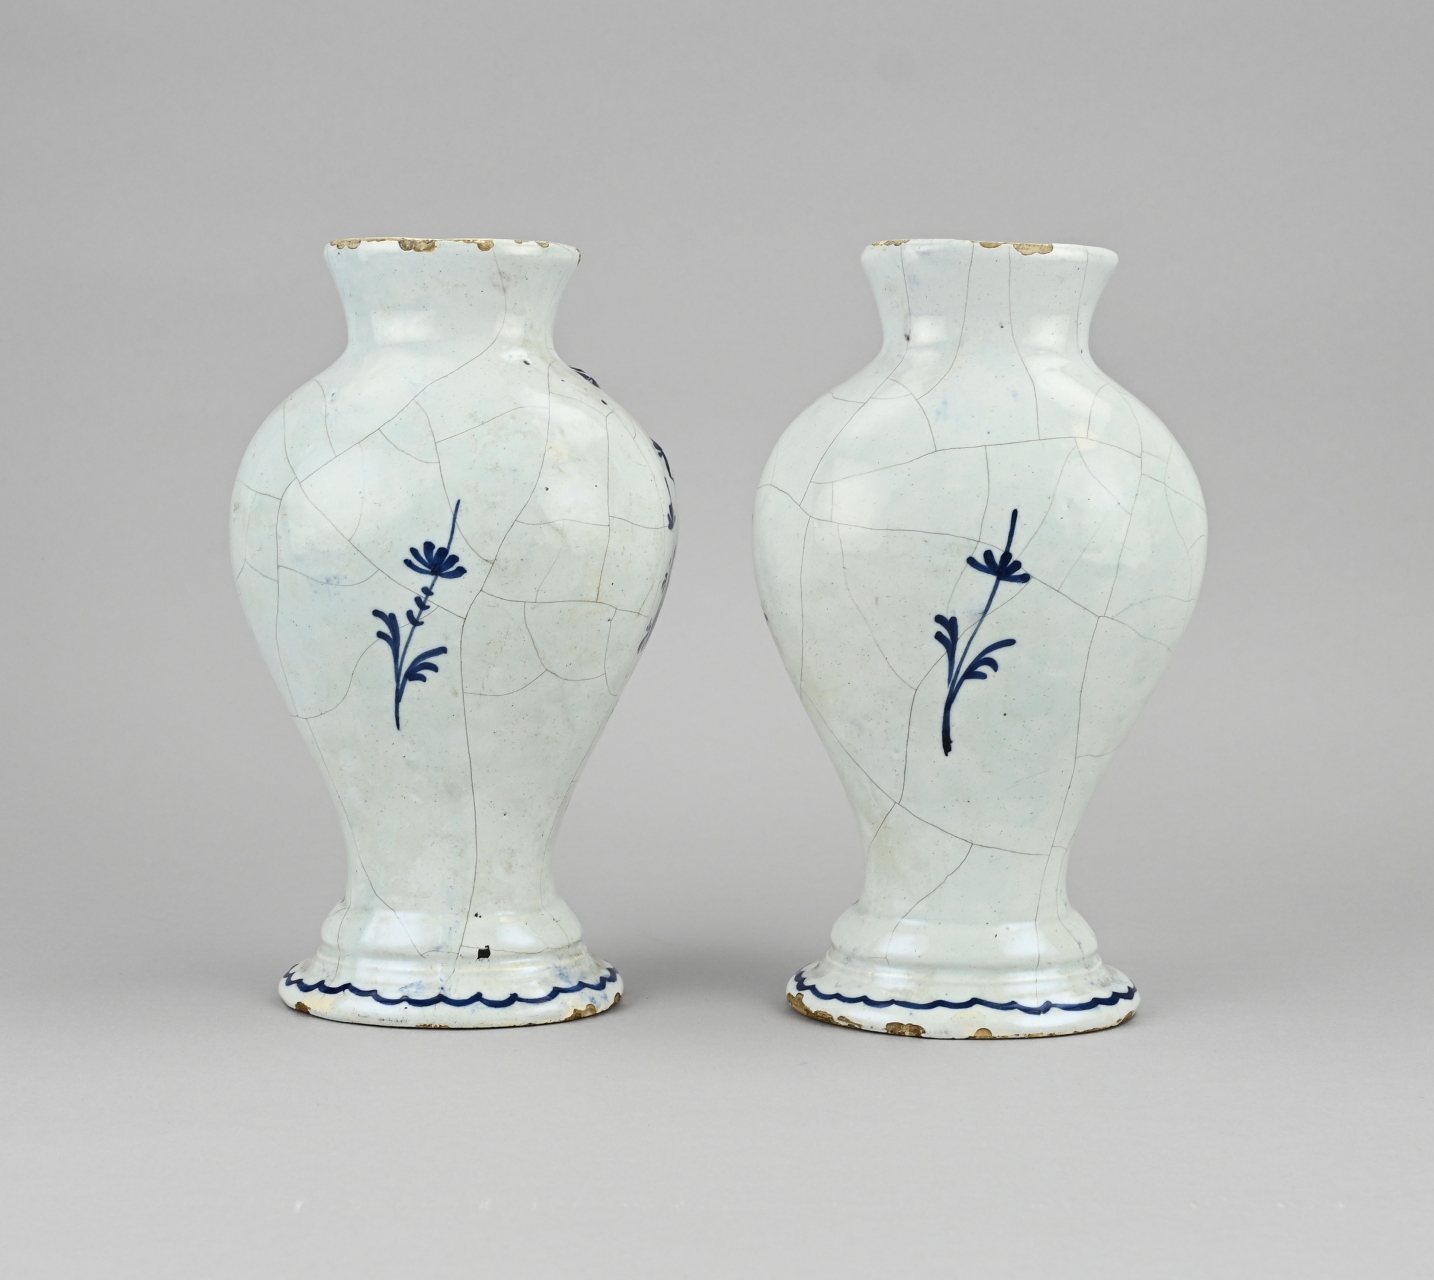 2x Delft vase, H 24 cm. - Image 2 of 3